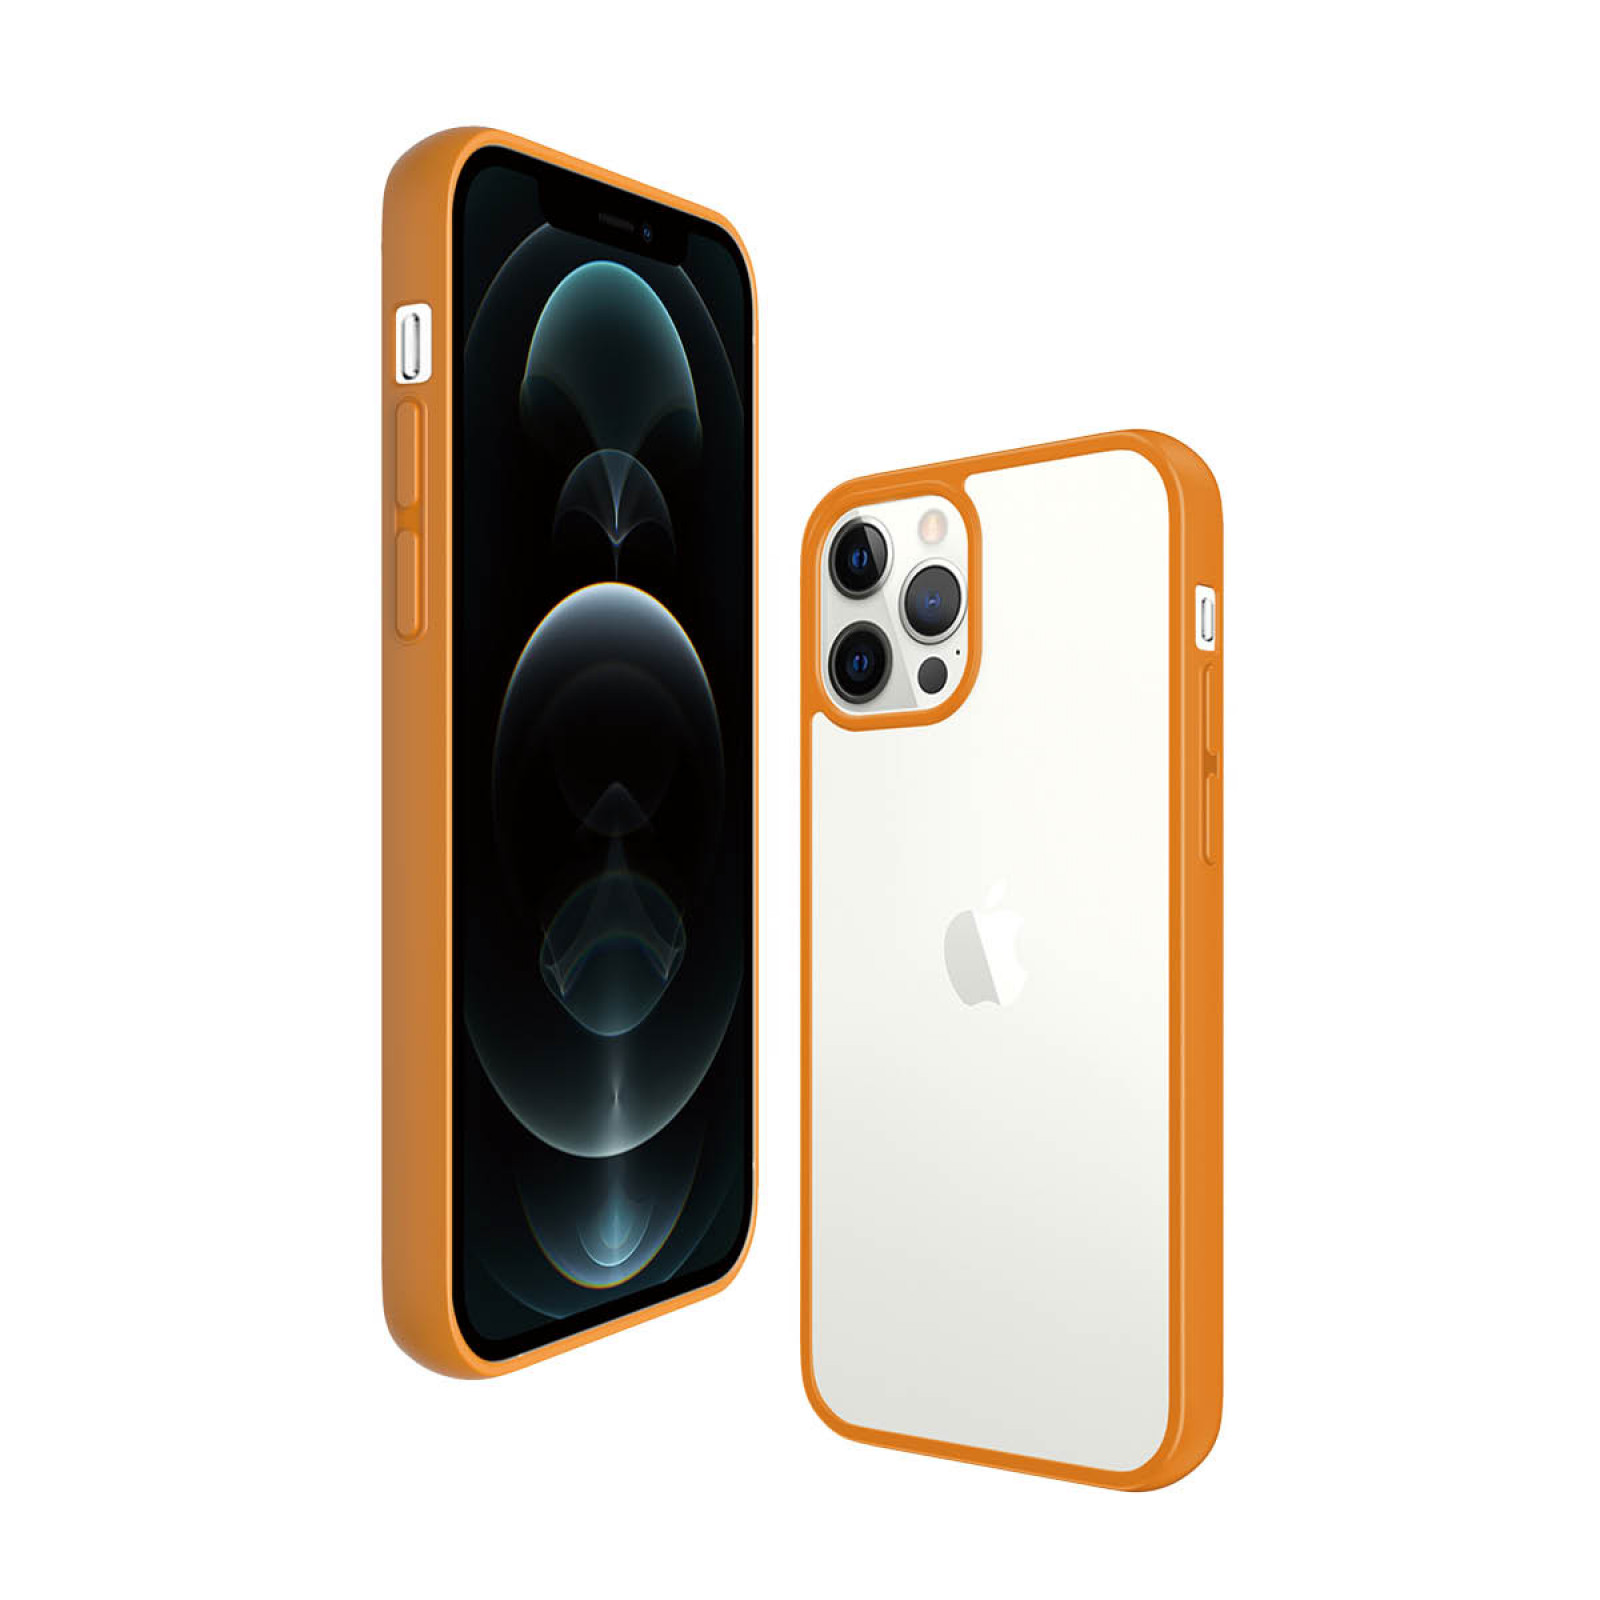 Гръб PanzerGlass за IPhone 12 / 12 Pro, ClearCase - Oранжева рамка